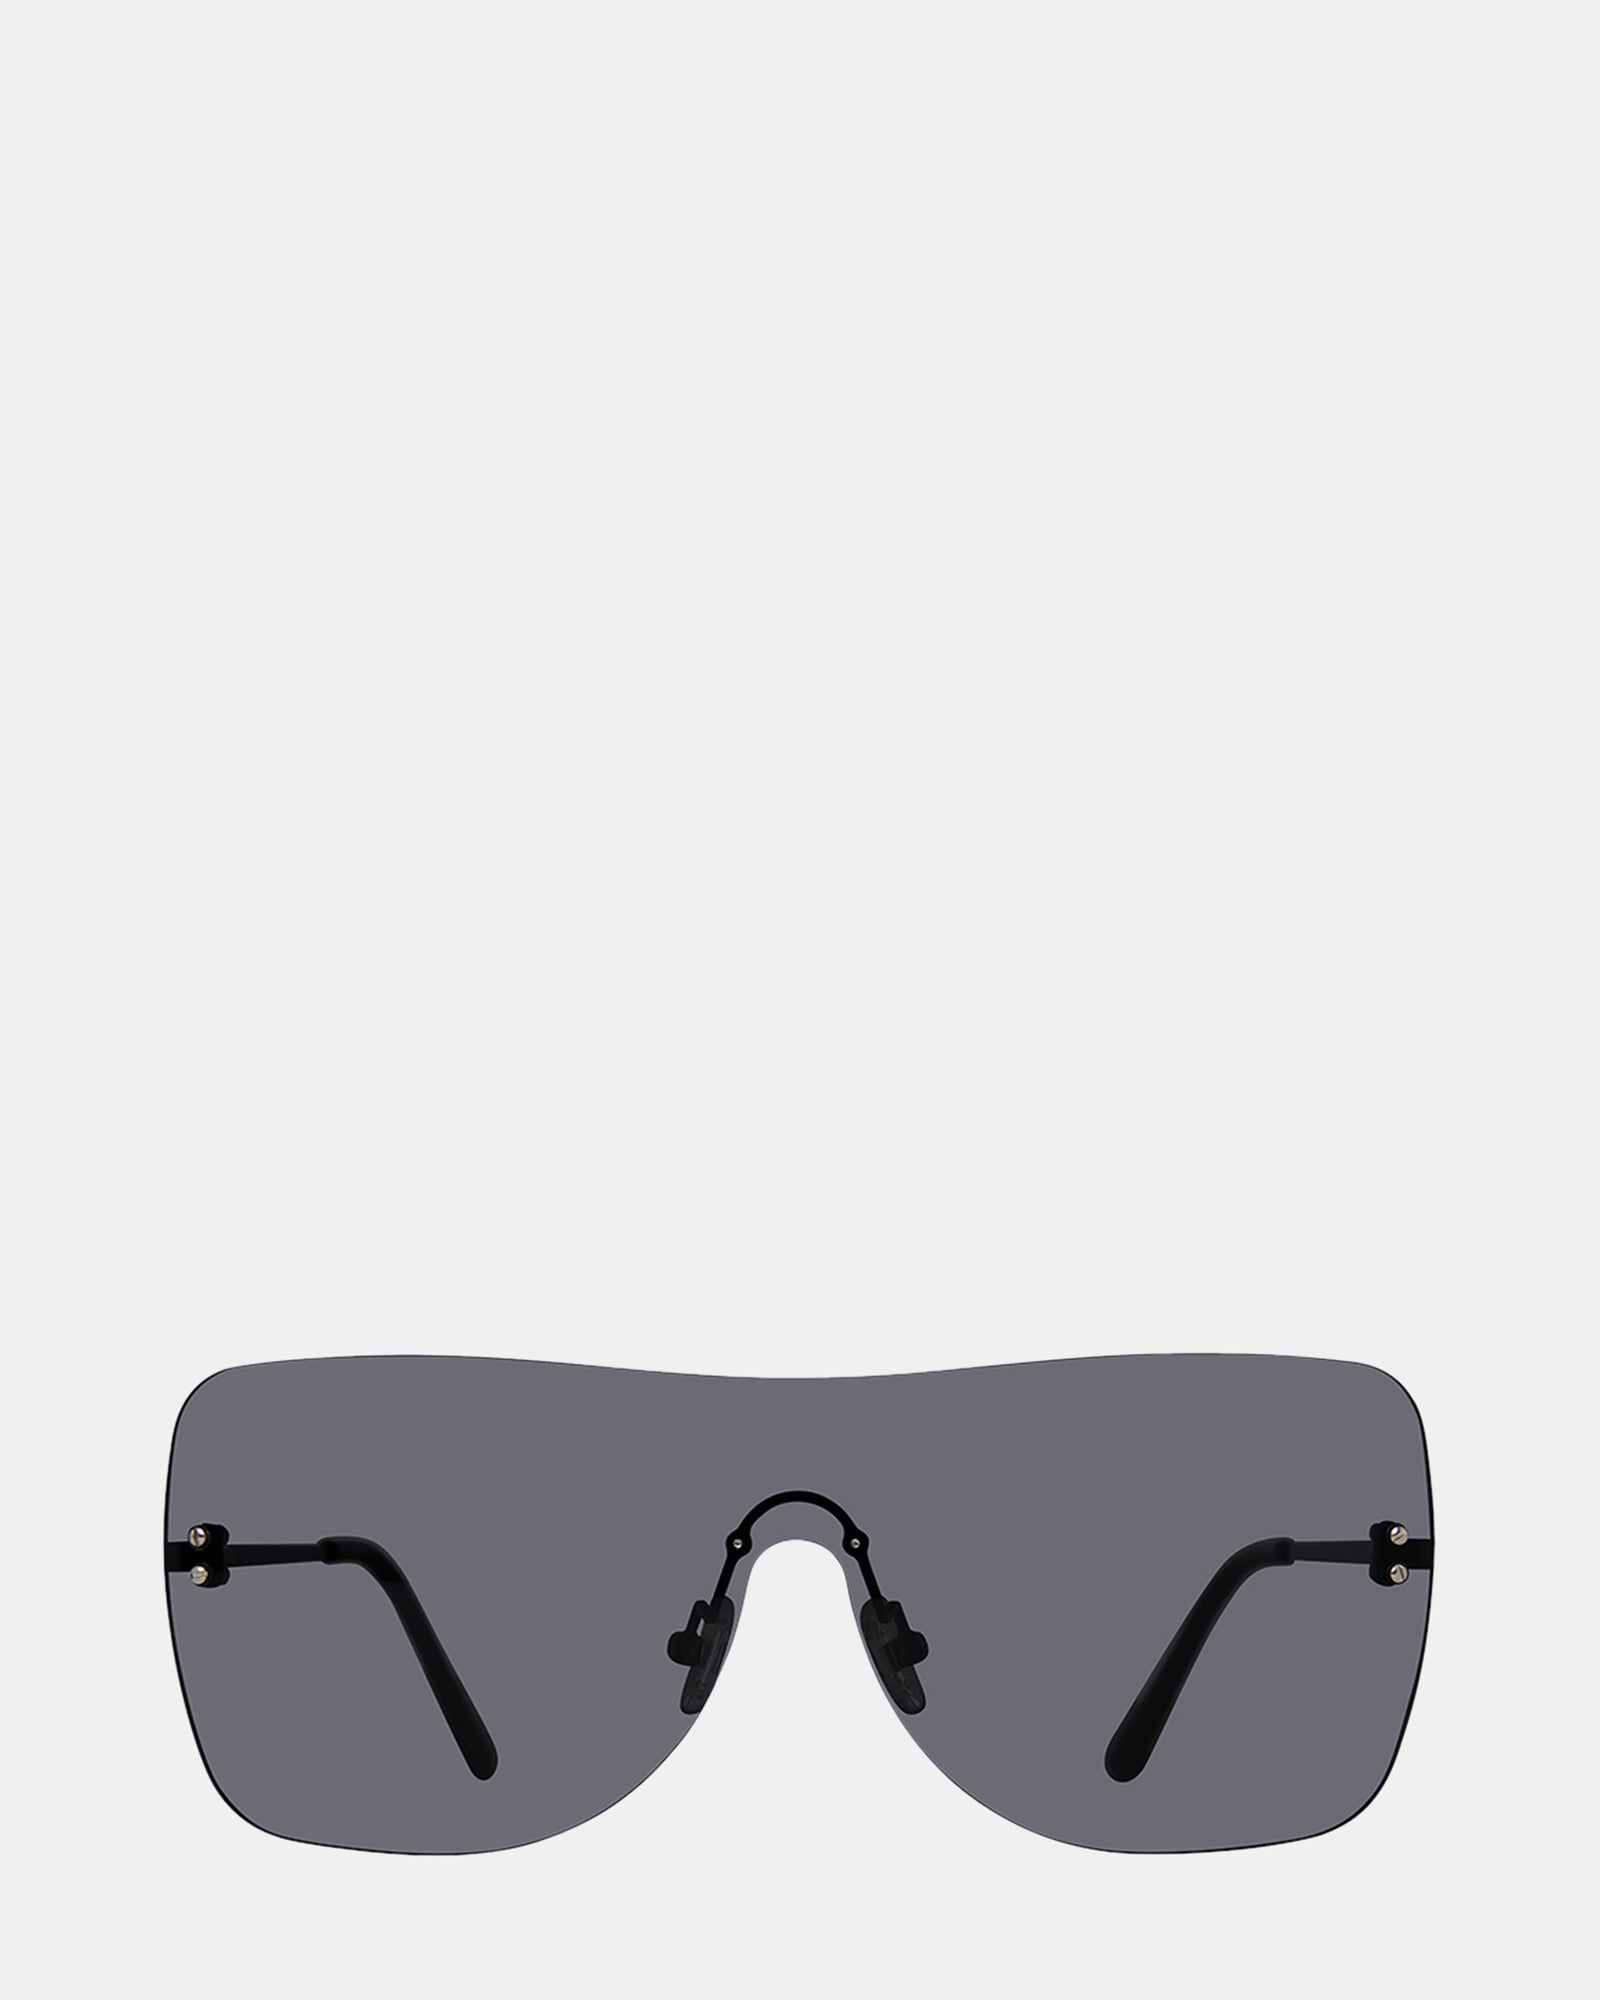 BENTLEY Sunglasses Black  Women's Clean Metal Shield Sunglasses